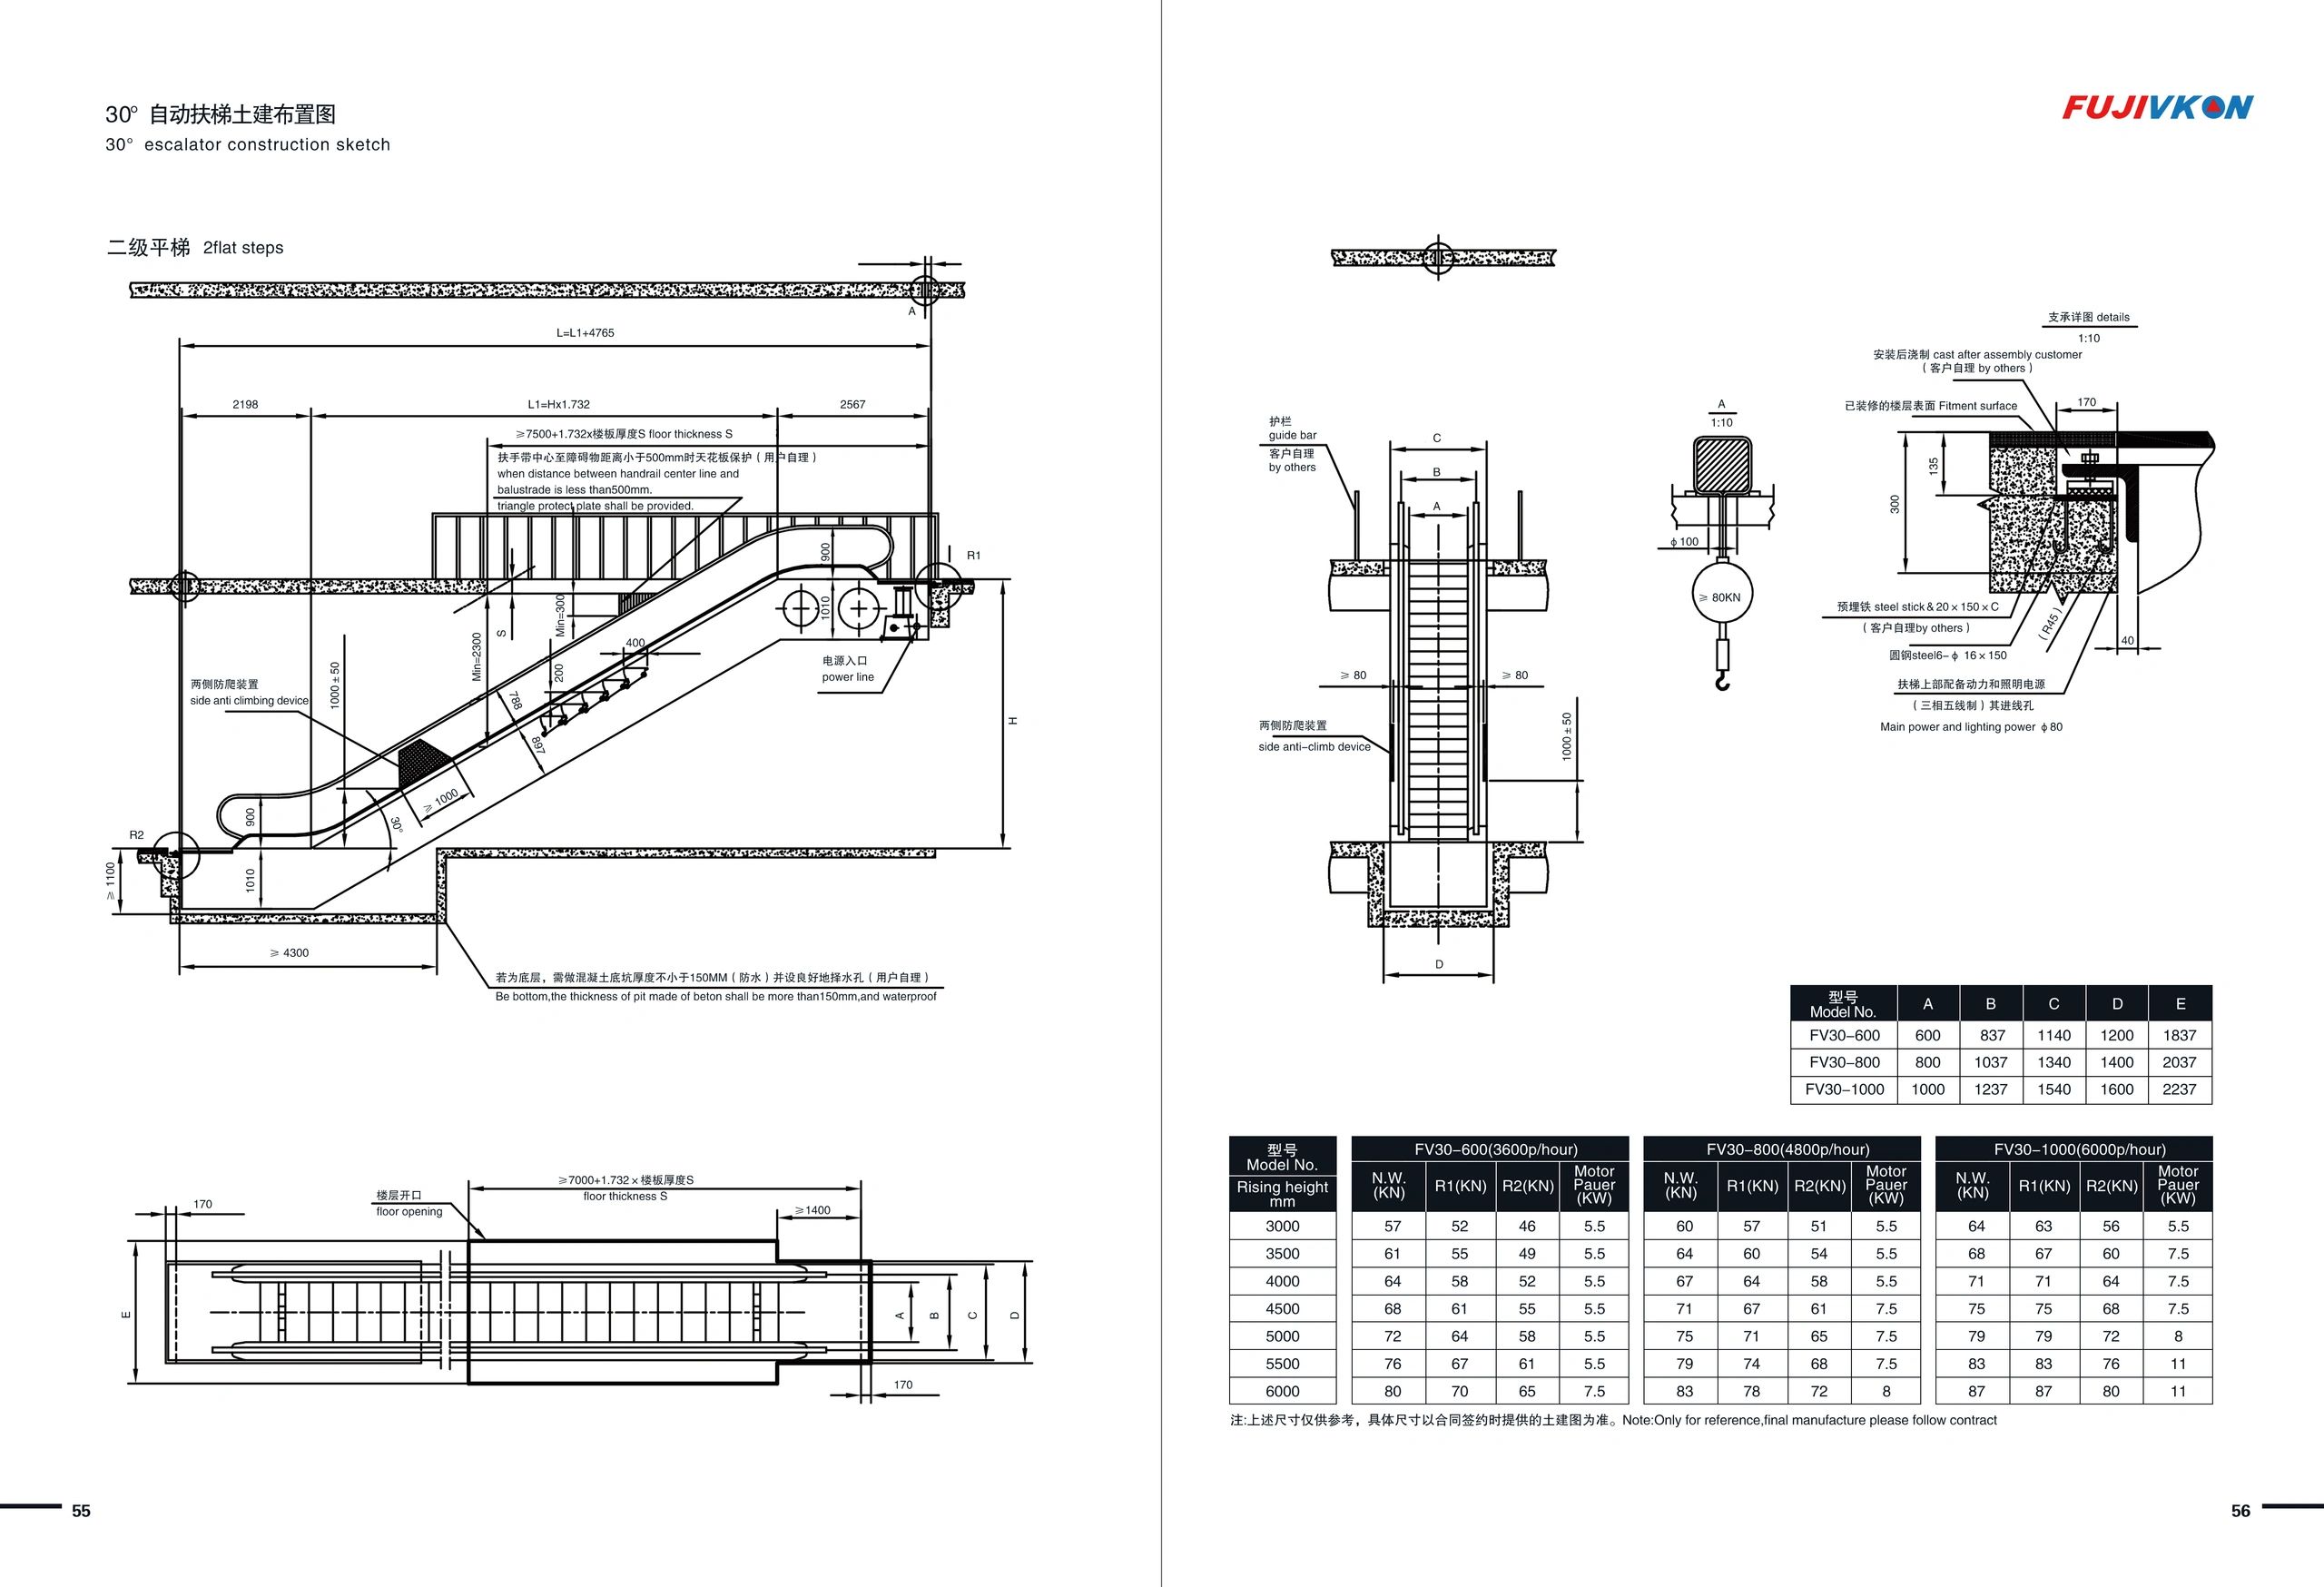 35 degree escalator manufacturer in China, standard drawings, parameters, escalator OEM in Chna